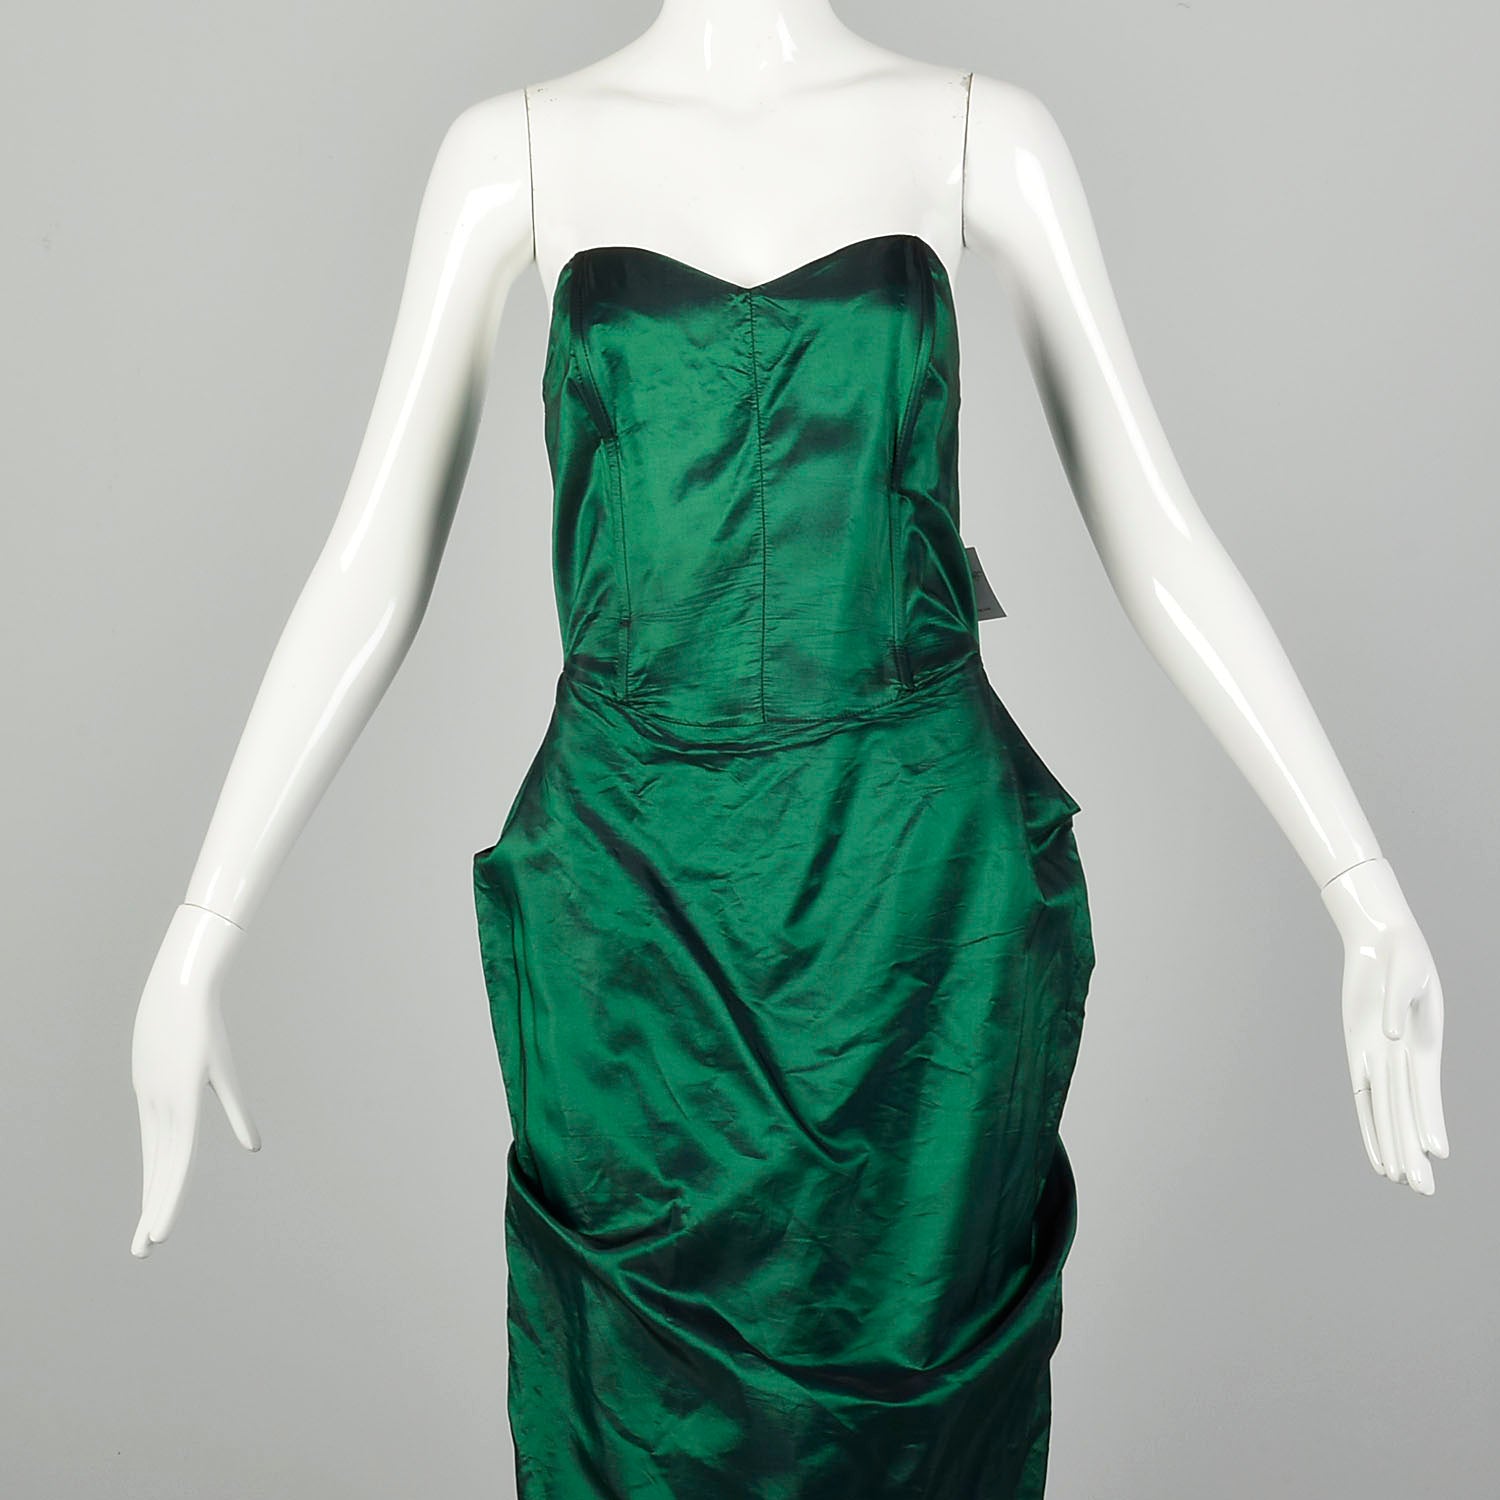 Small 1980s Dress Formal Green Taffeta Mermaid Strapless Evening Prom Gown